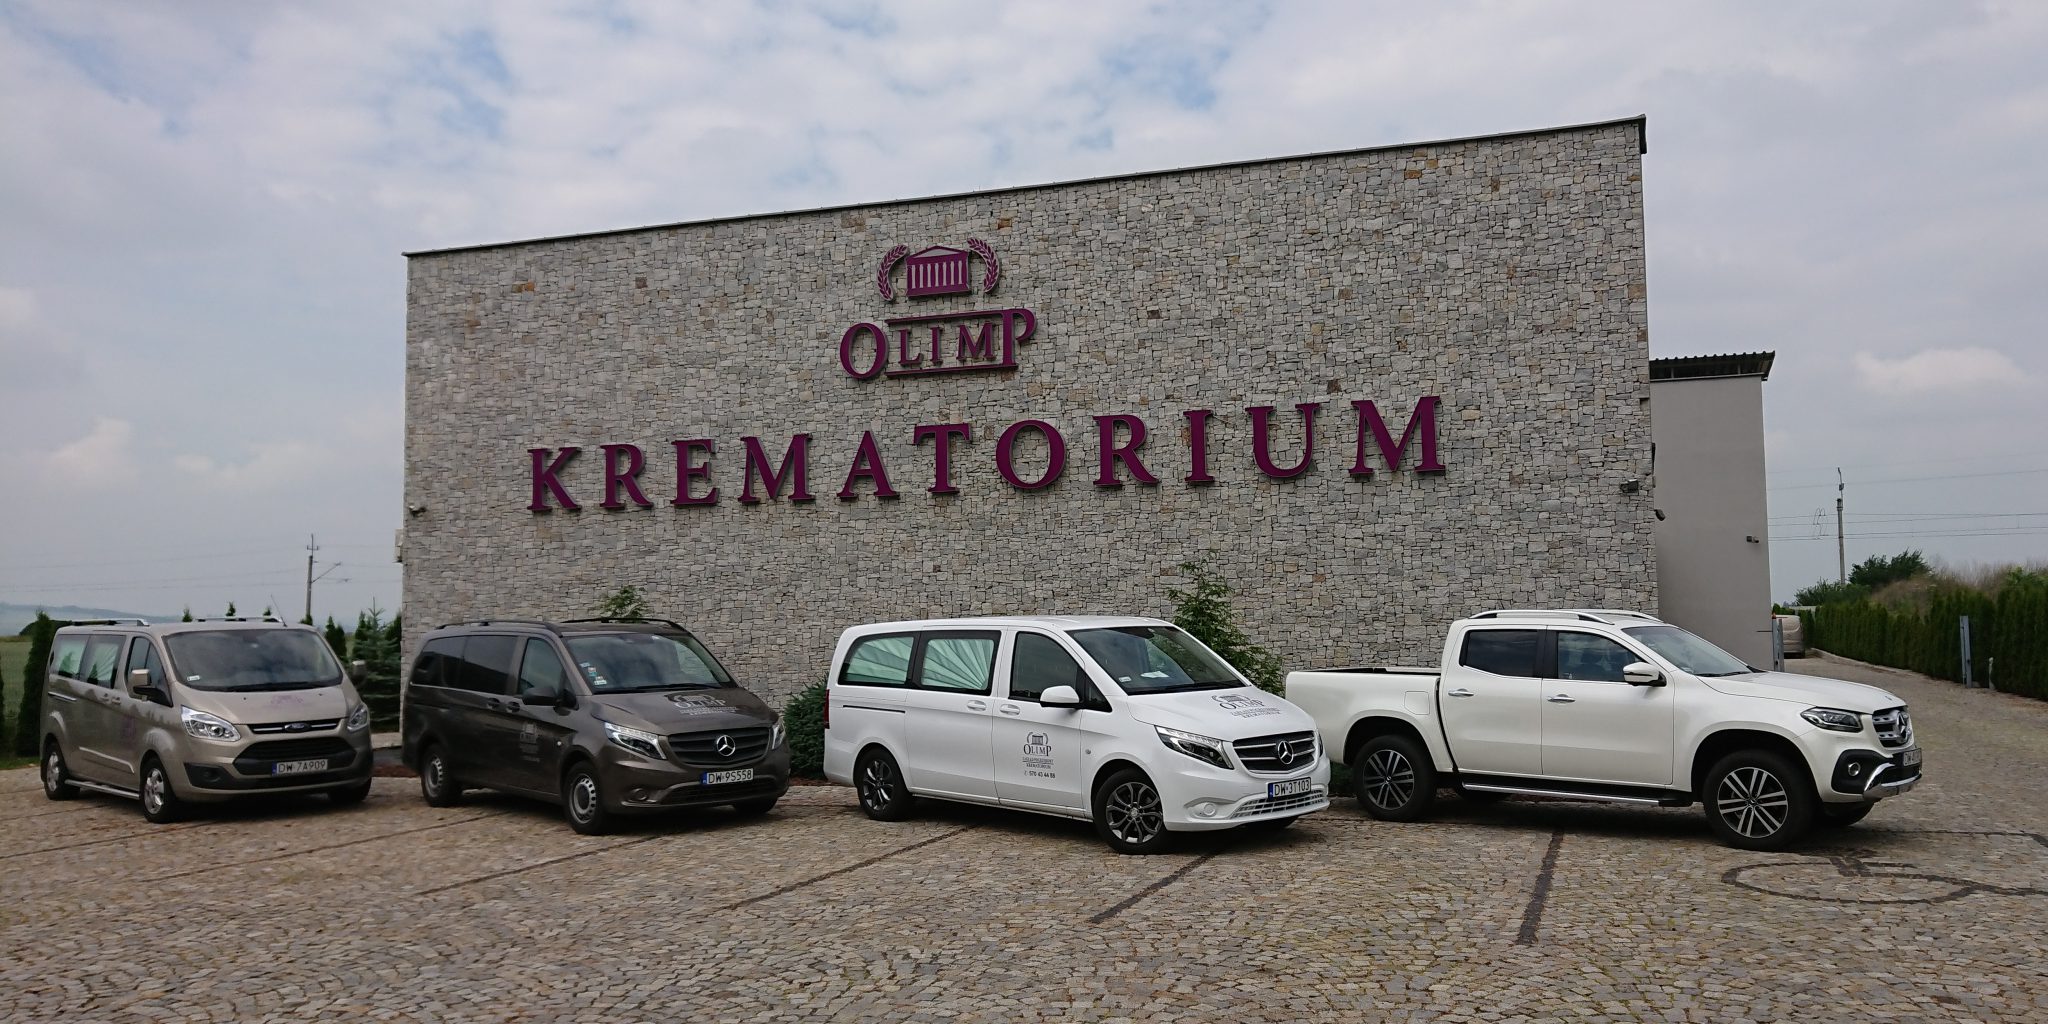 Krematorium Strzelin - duża flota Olimpu